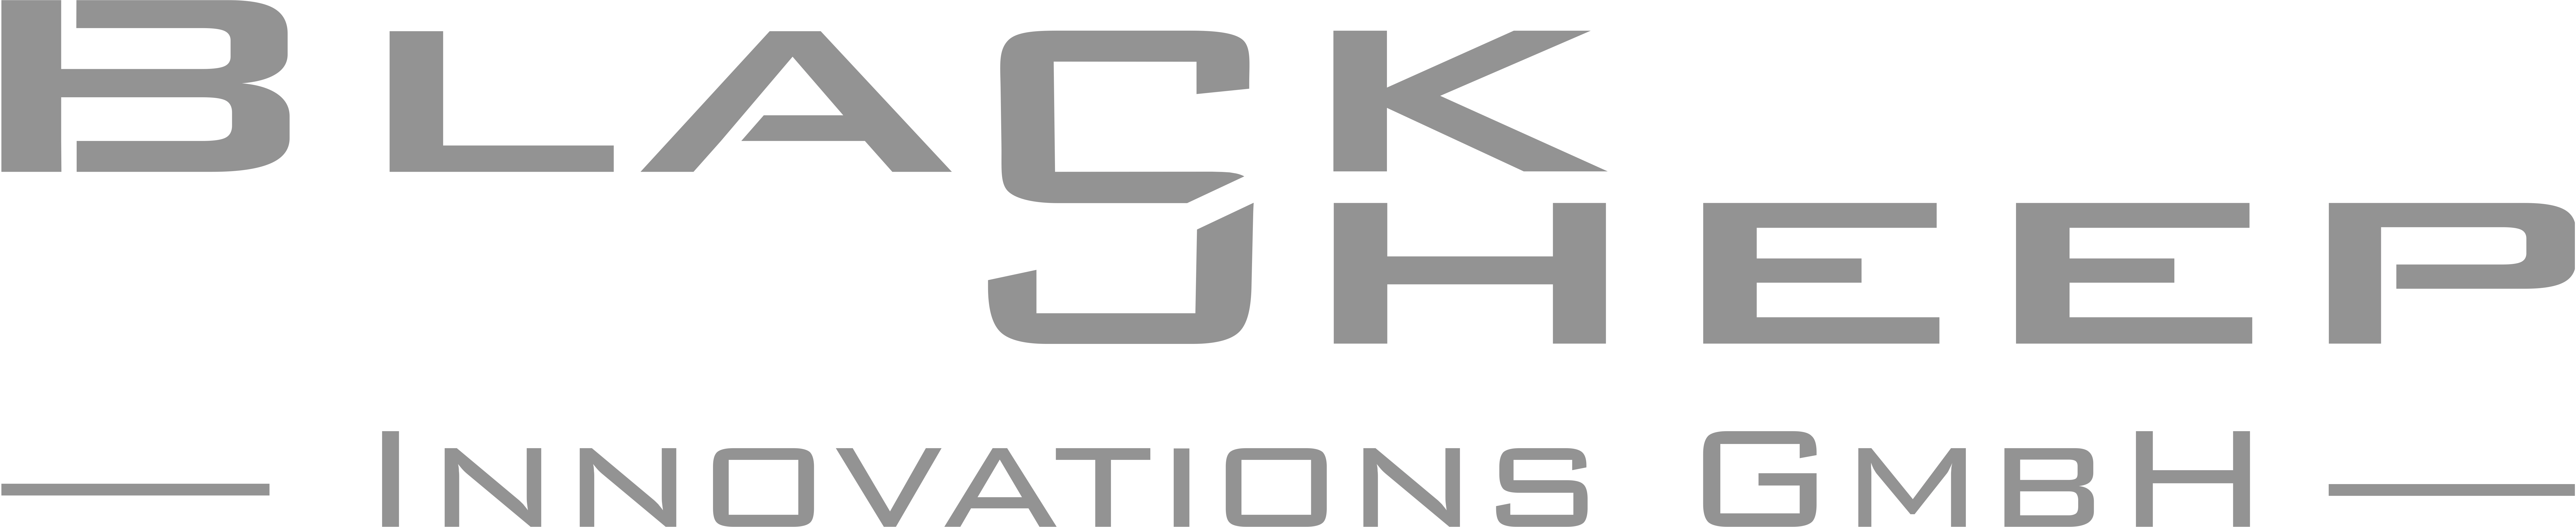 Black Sheep Innovations GmbH